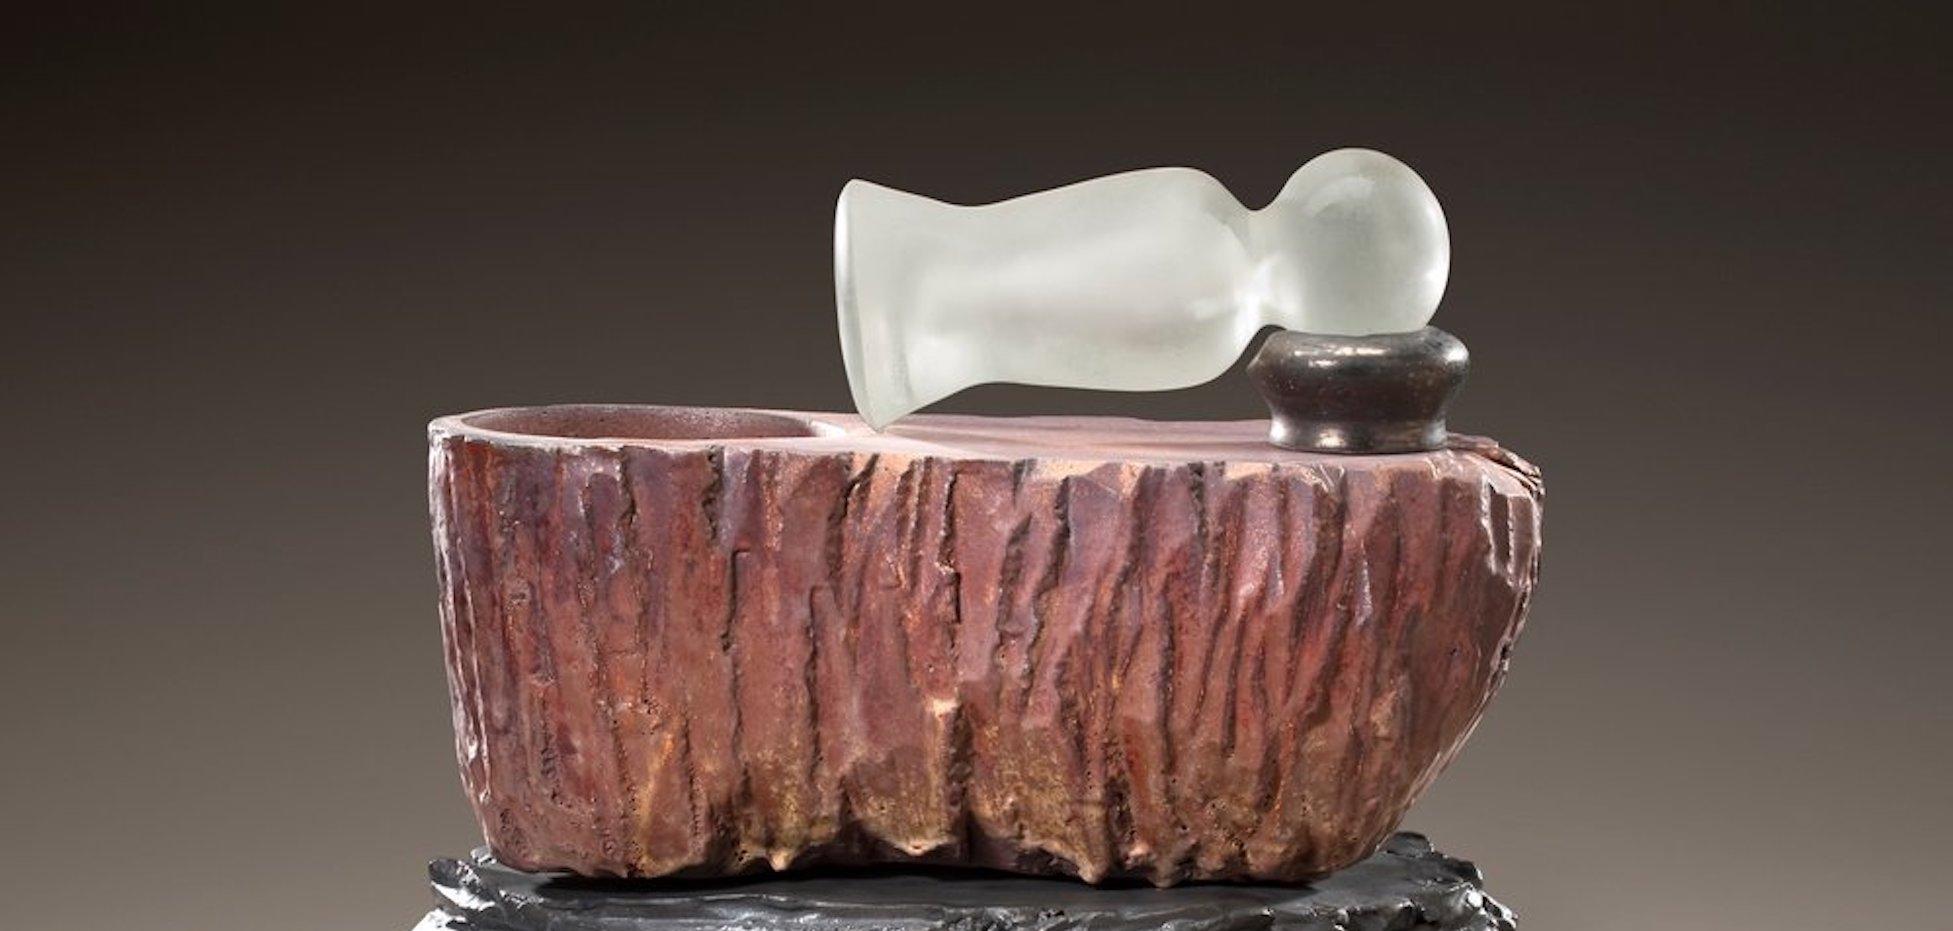 American Richard Hirsch Ceramic Mortar and Hot Blown Glass Pestle Sculpture, 2009 For Sale